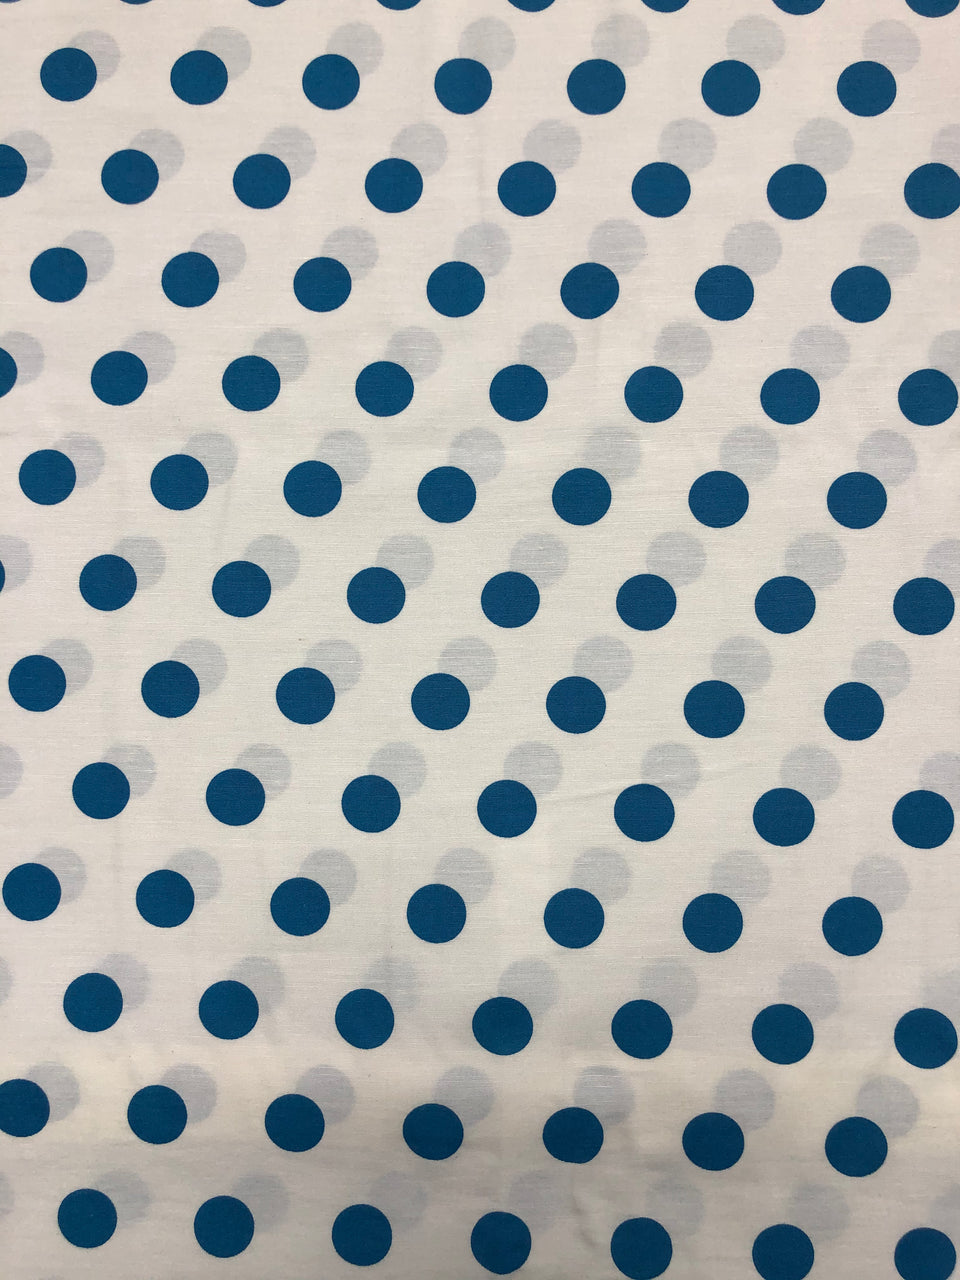 Polka Dot - Turquoise (3/4")